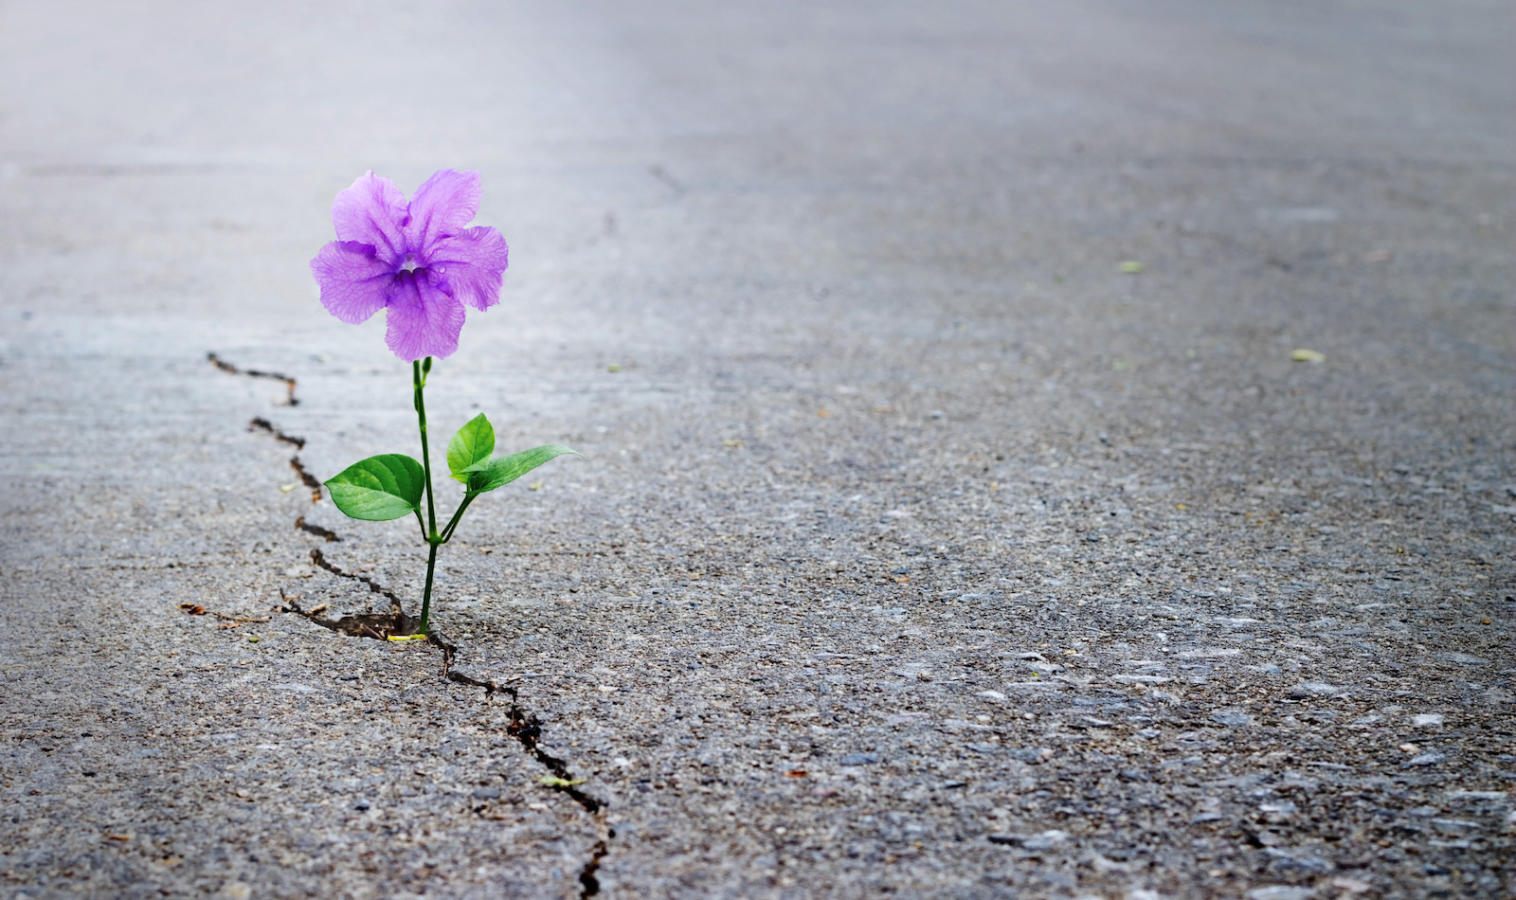 Flower growing through crack in asphalt